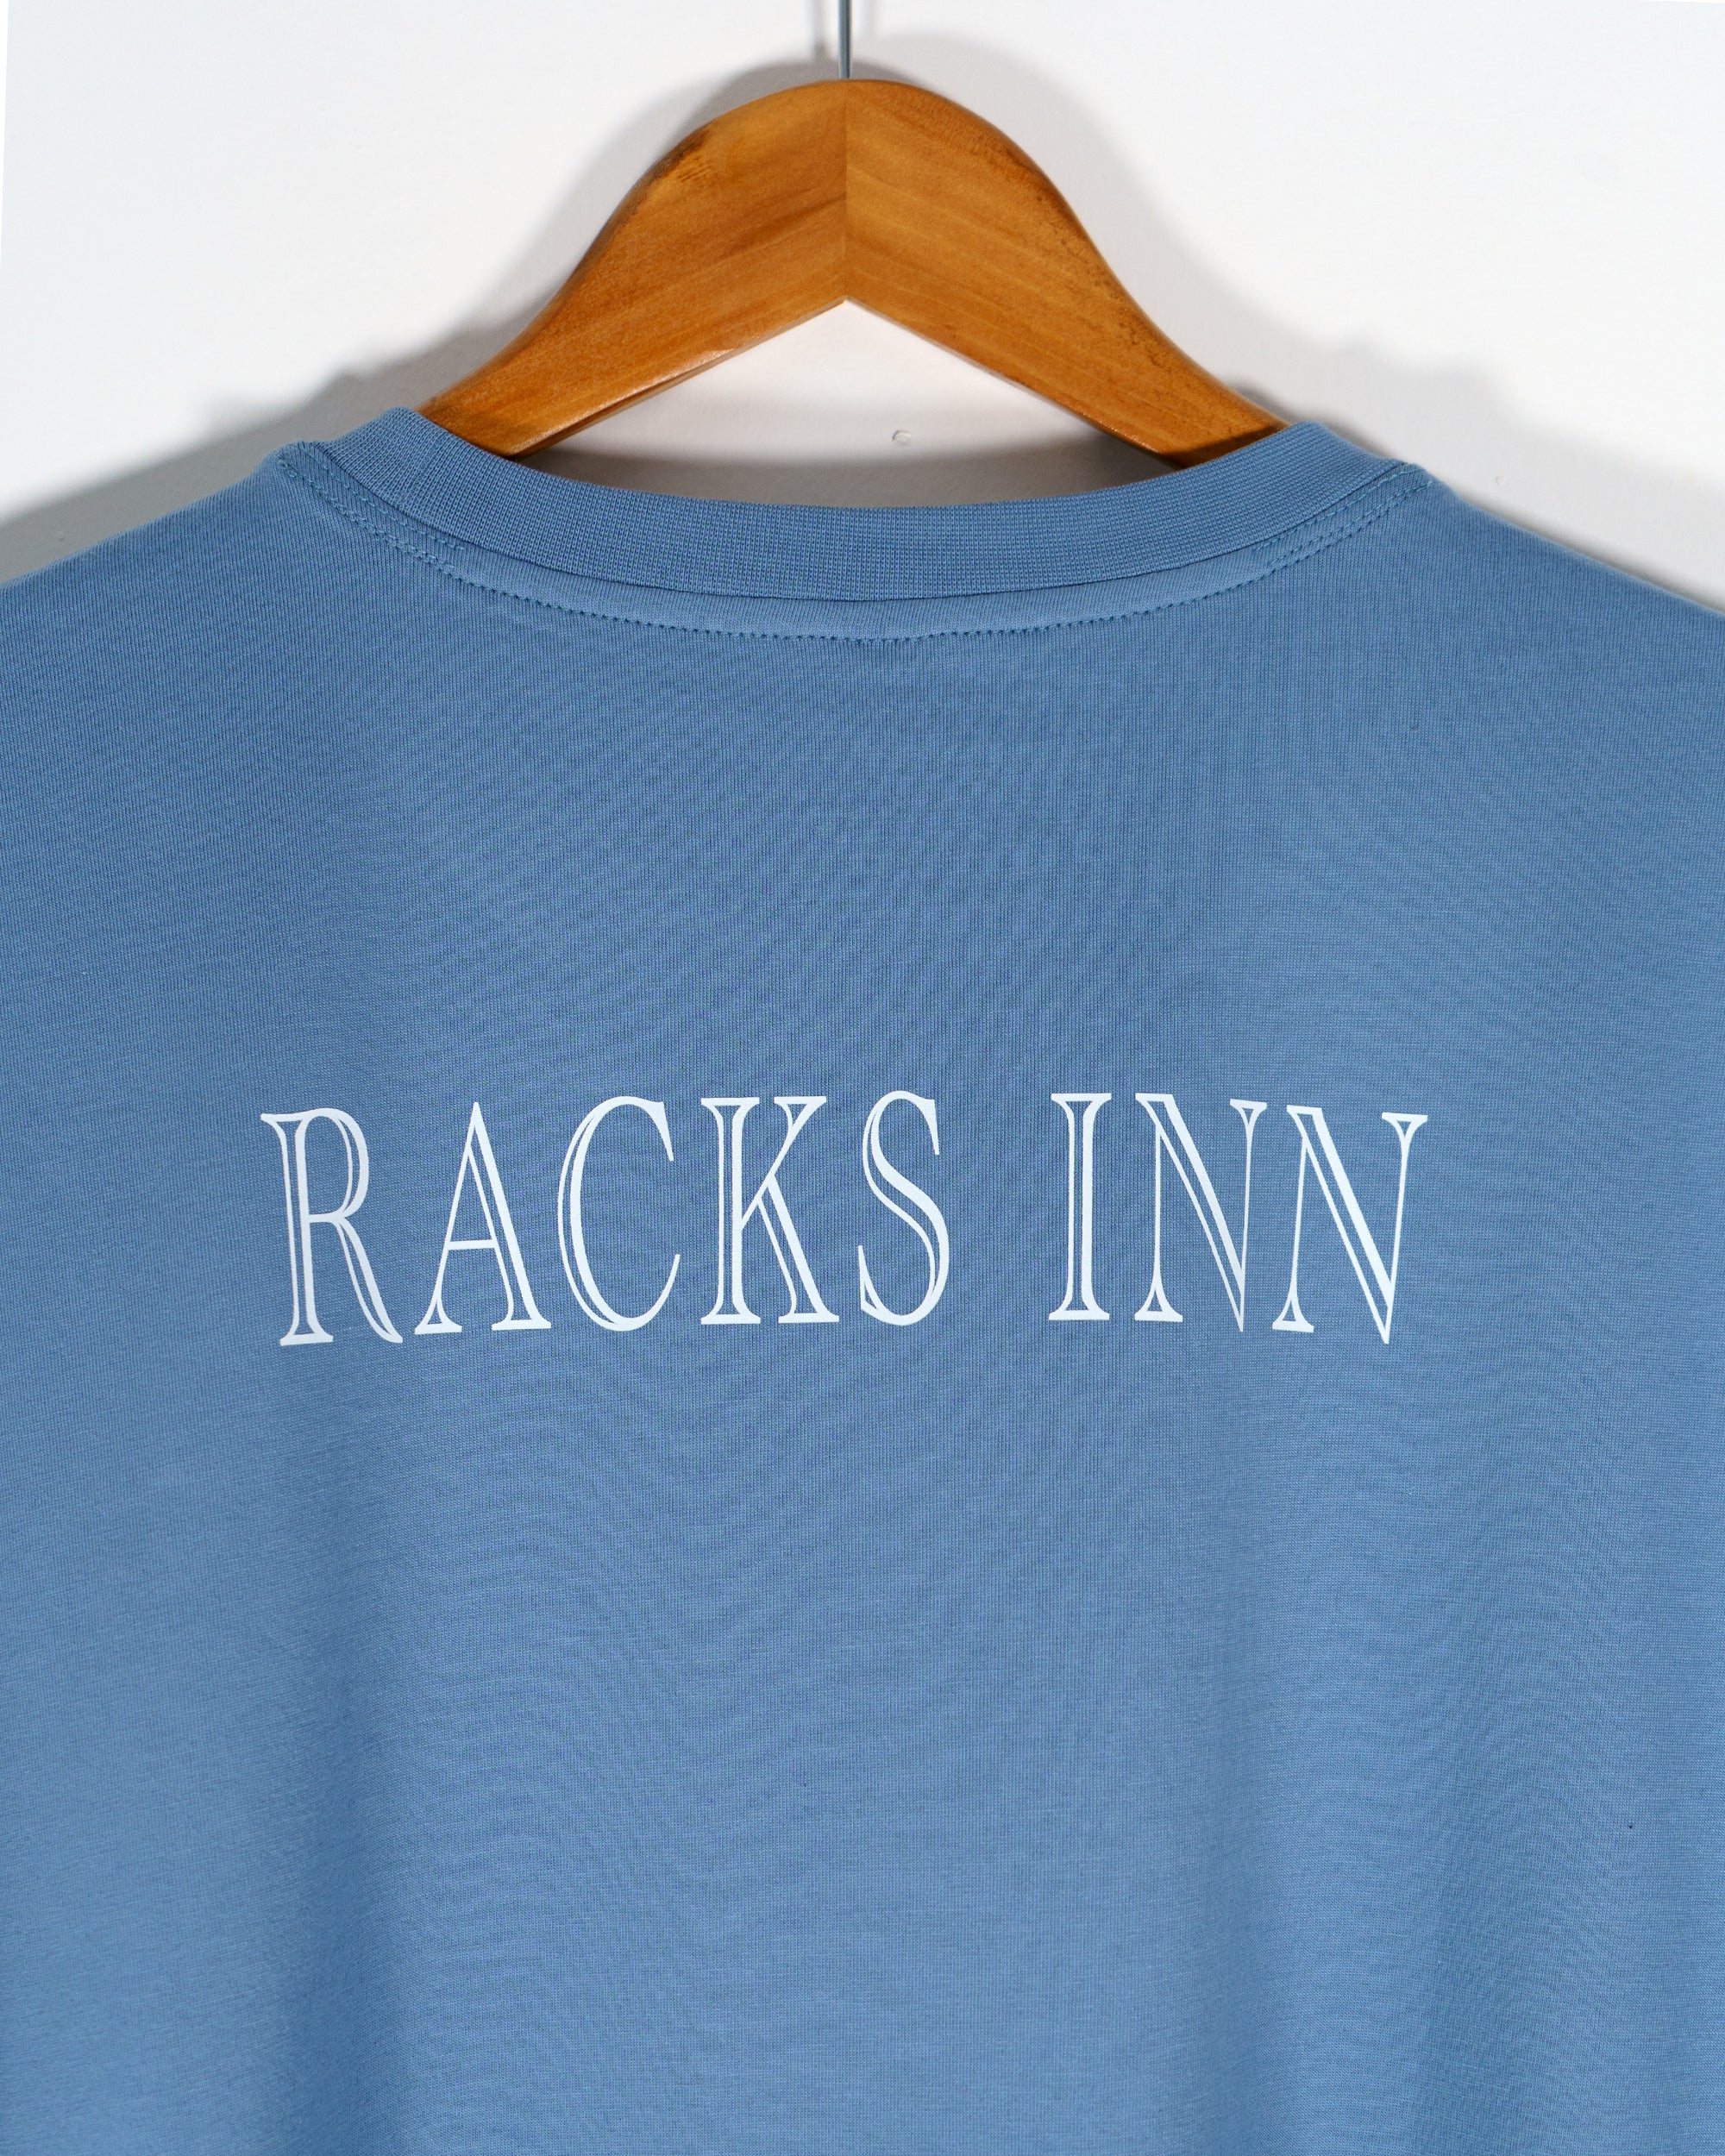 For The Love of Racks T-Shirt - Carolina Blue